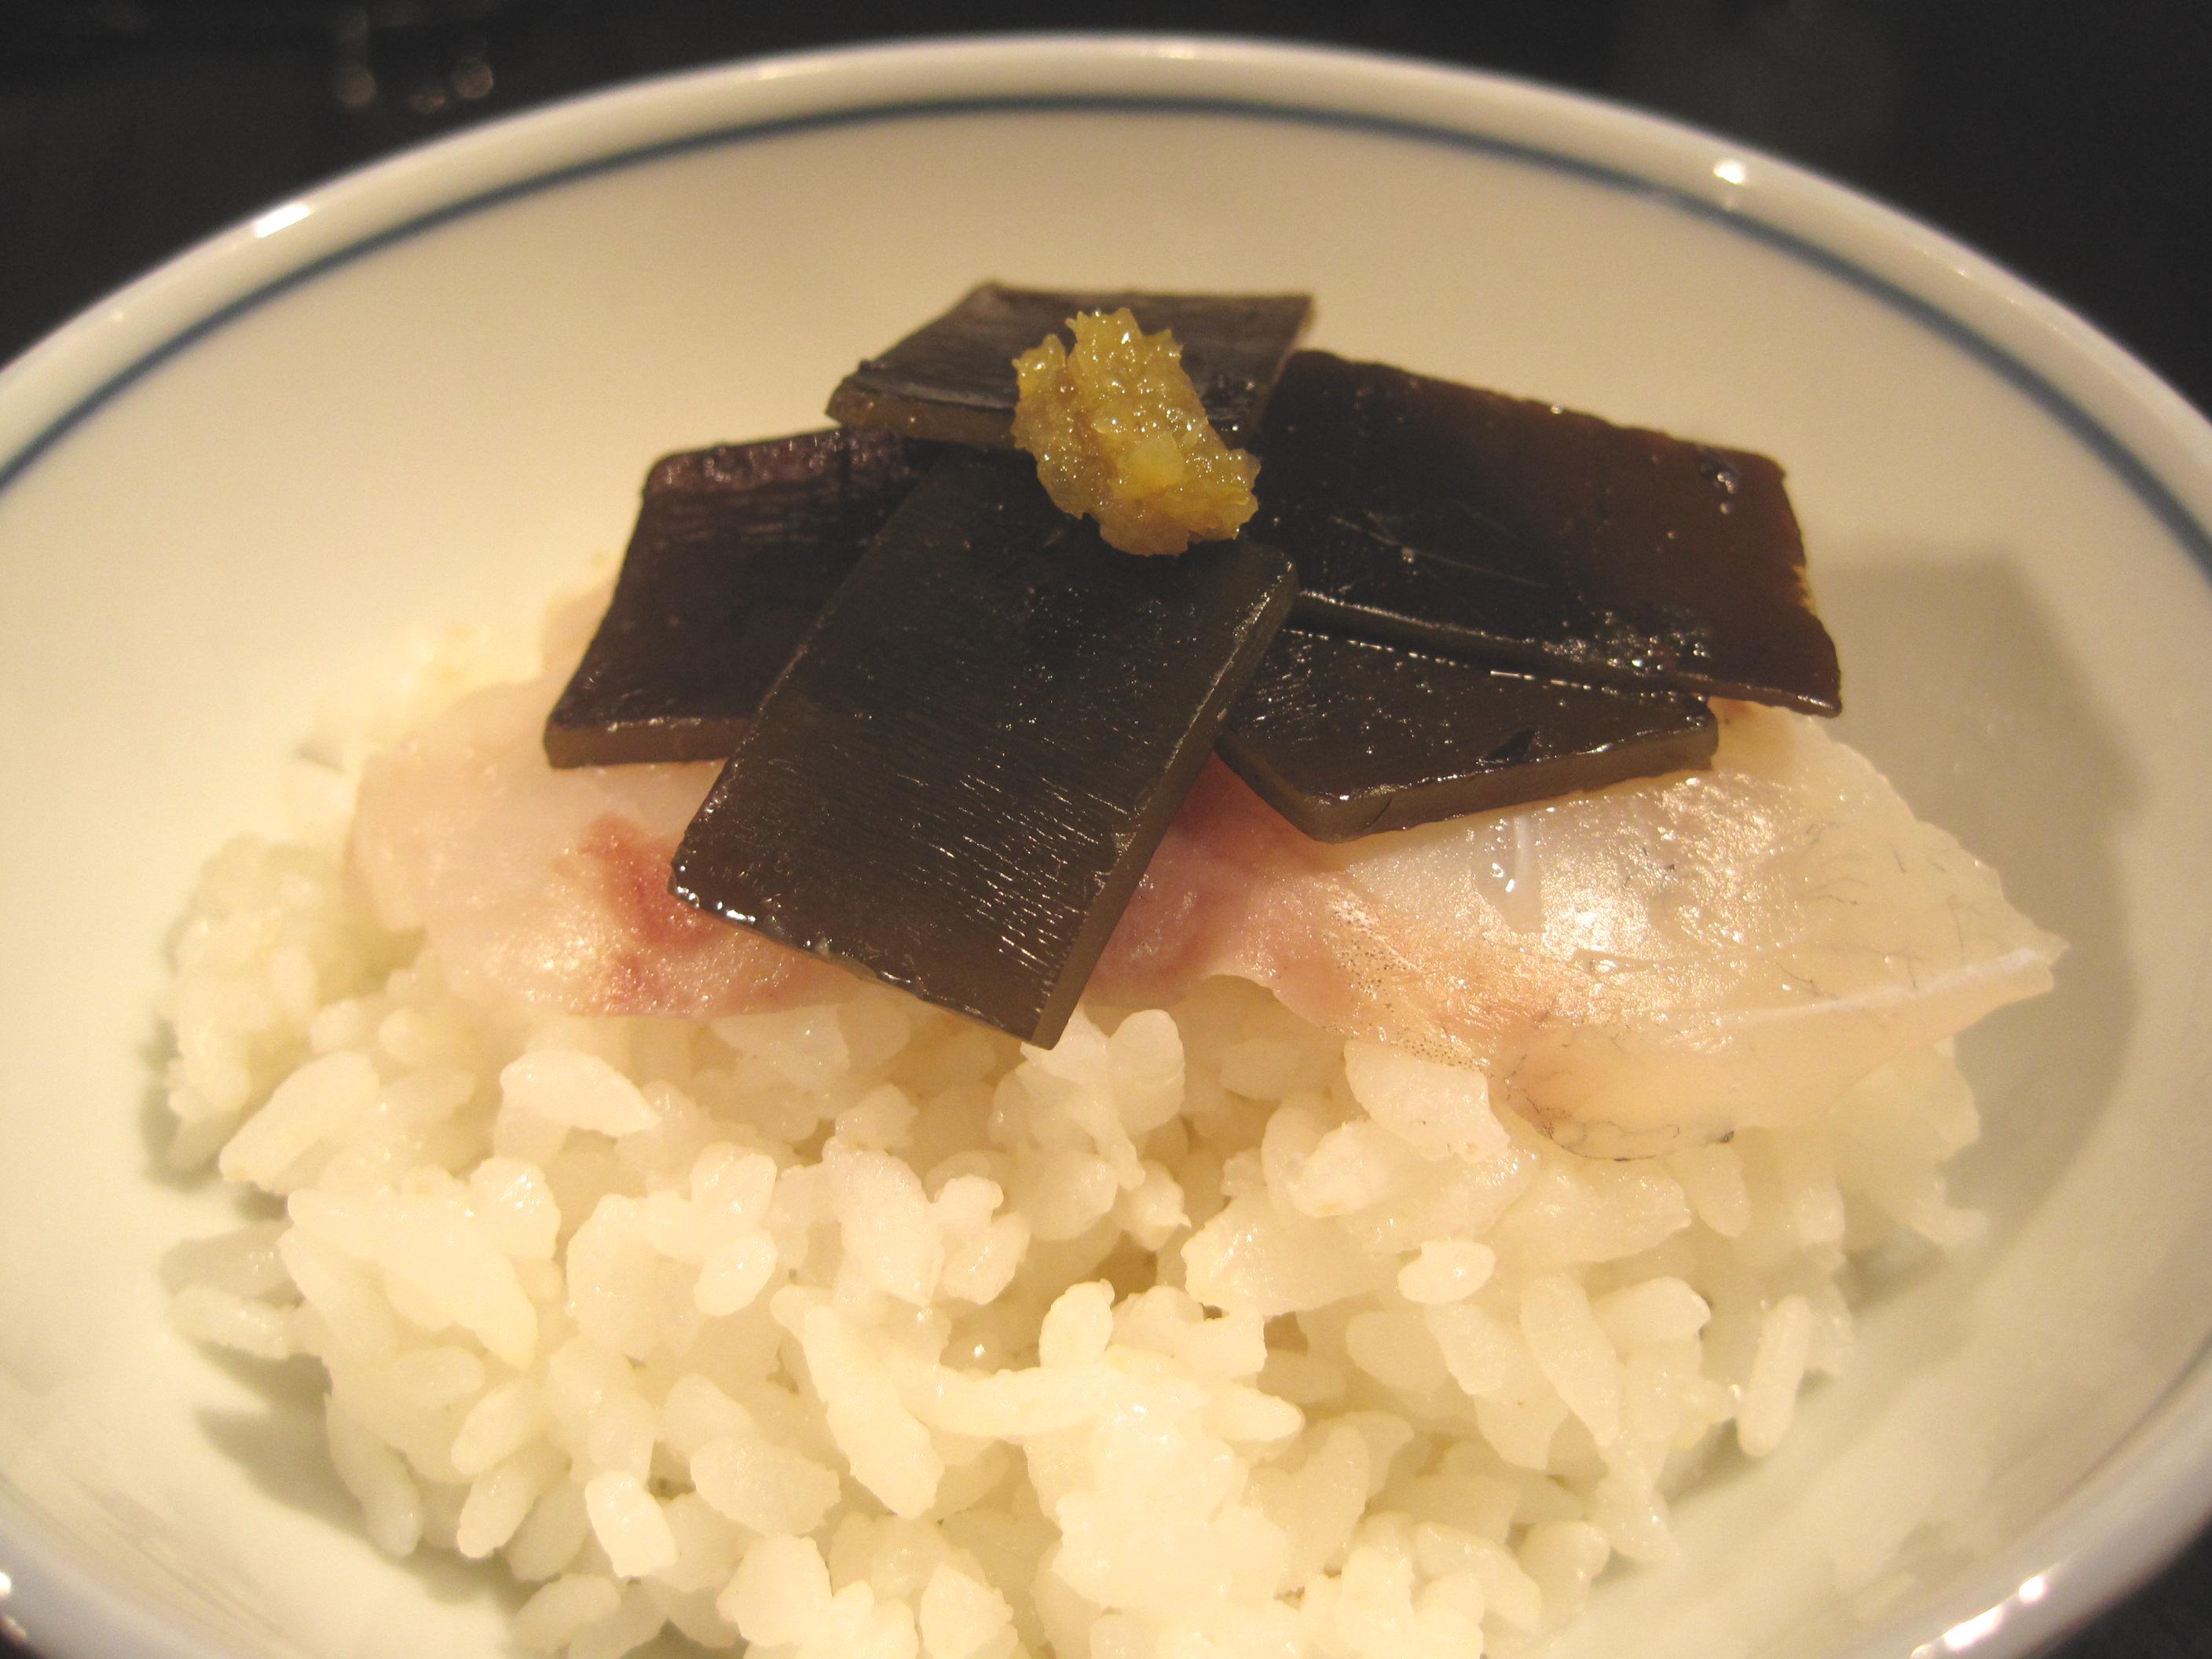 Kombu Seaweed: 3 Recipes to Try